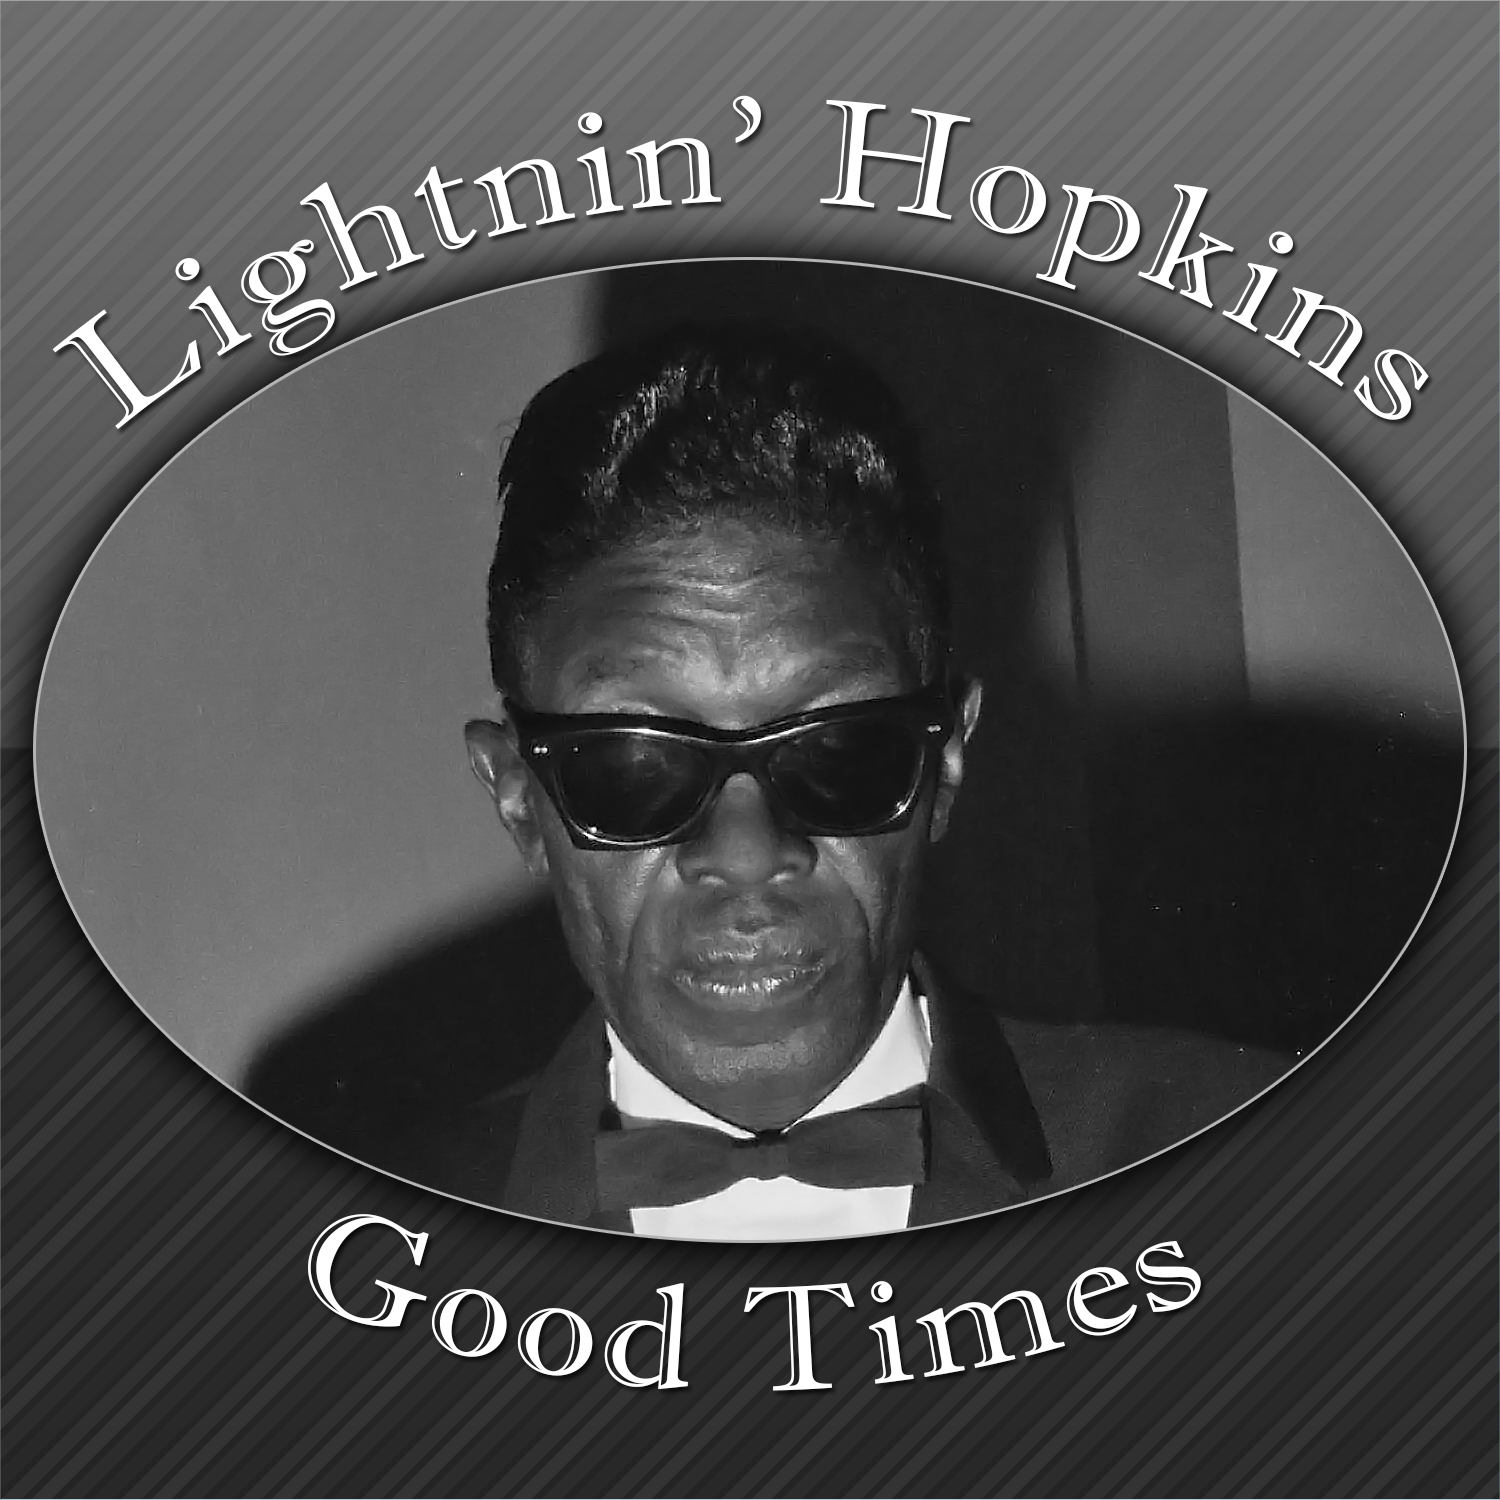 Good Times by Lightnin' Hopkins